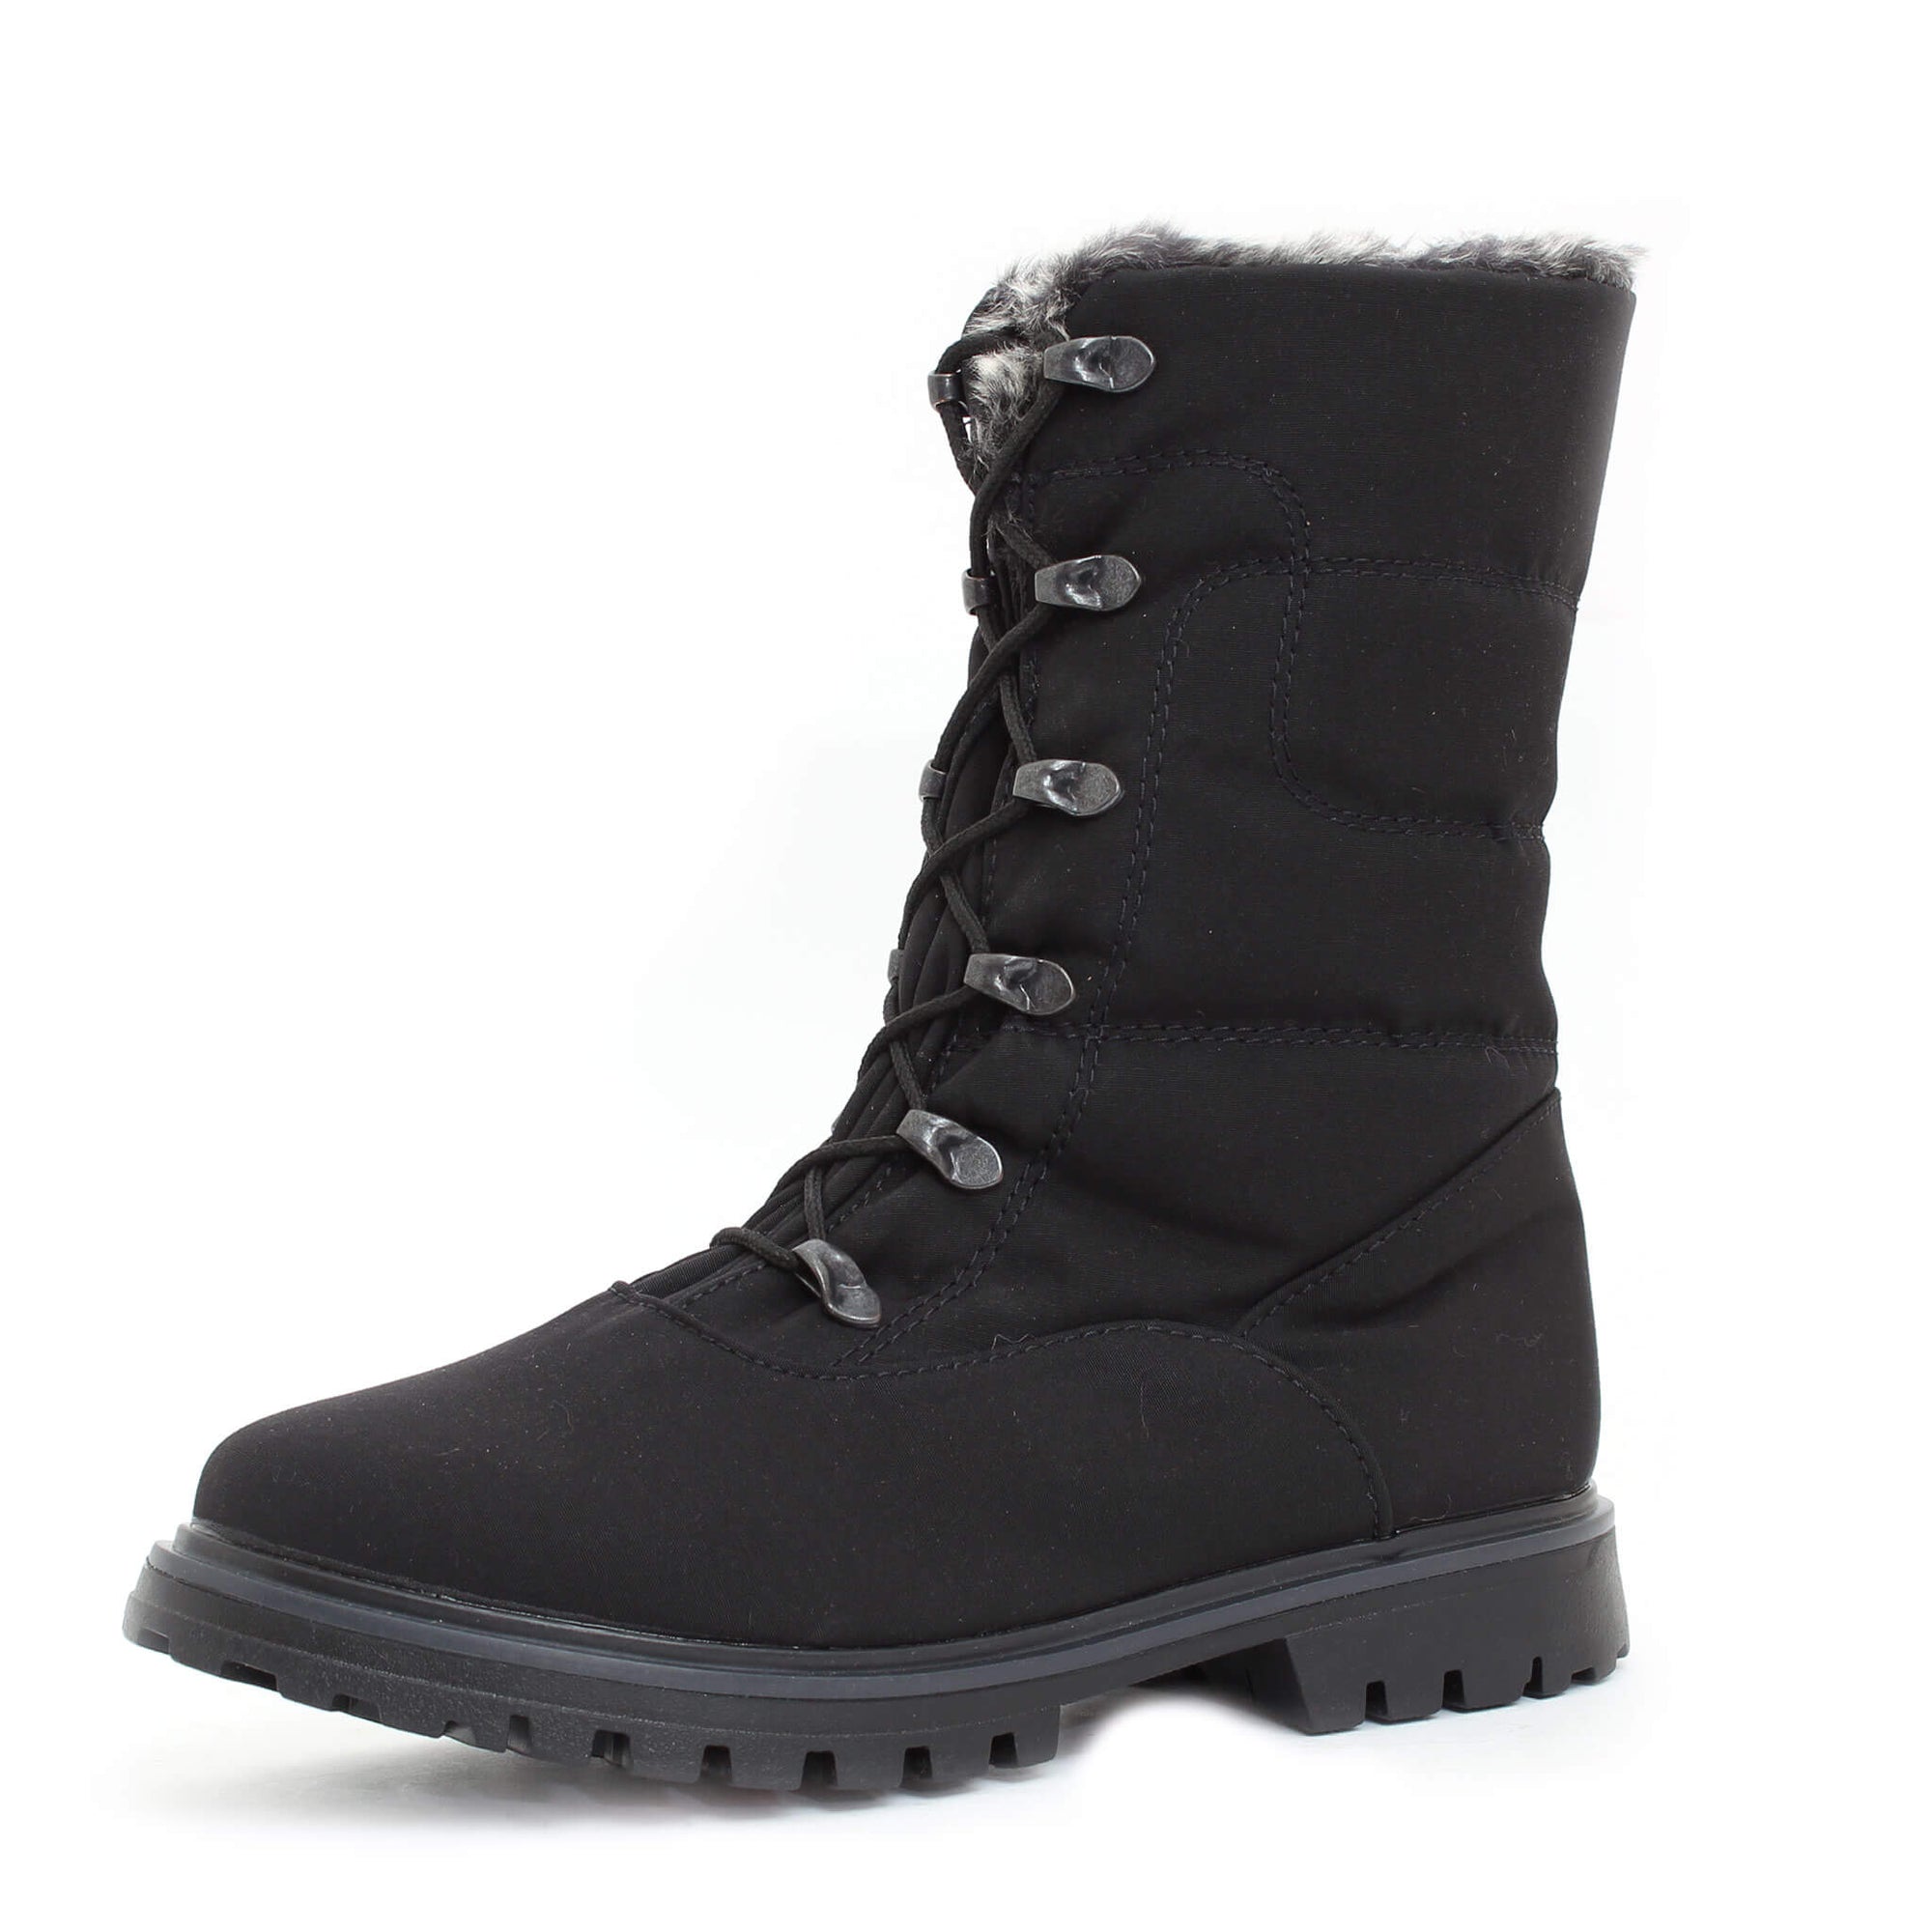 Audrey winter boot for women - Black